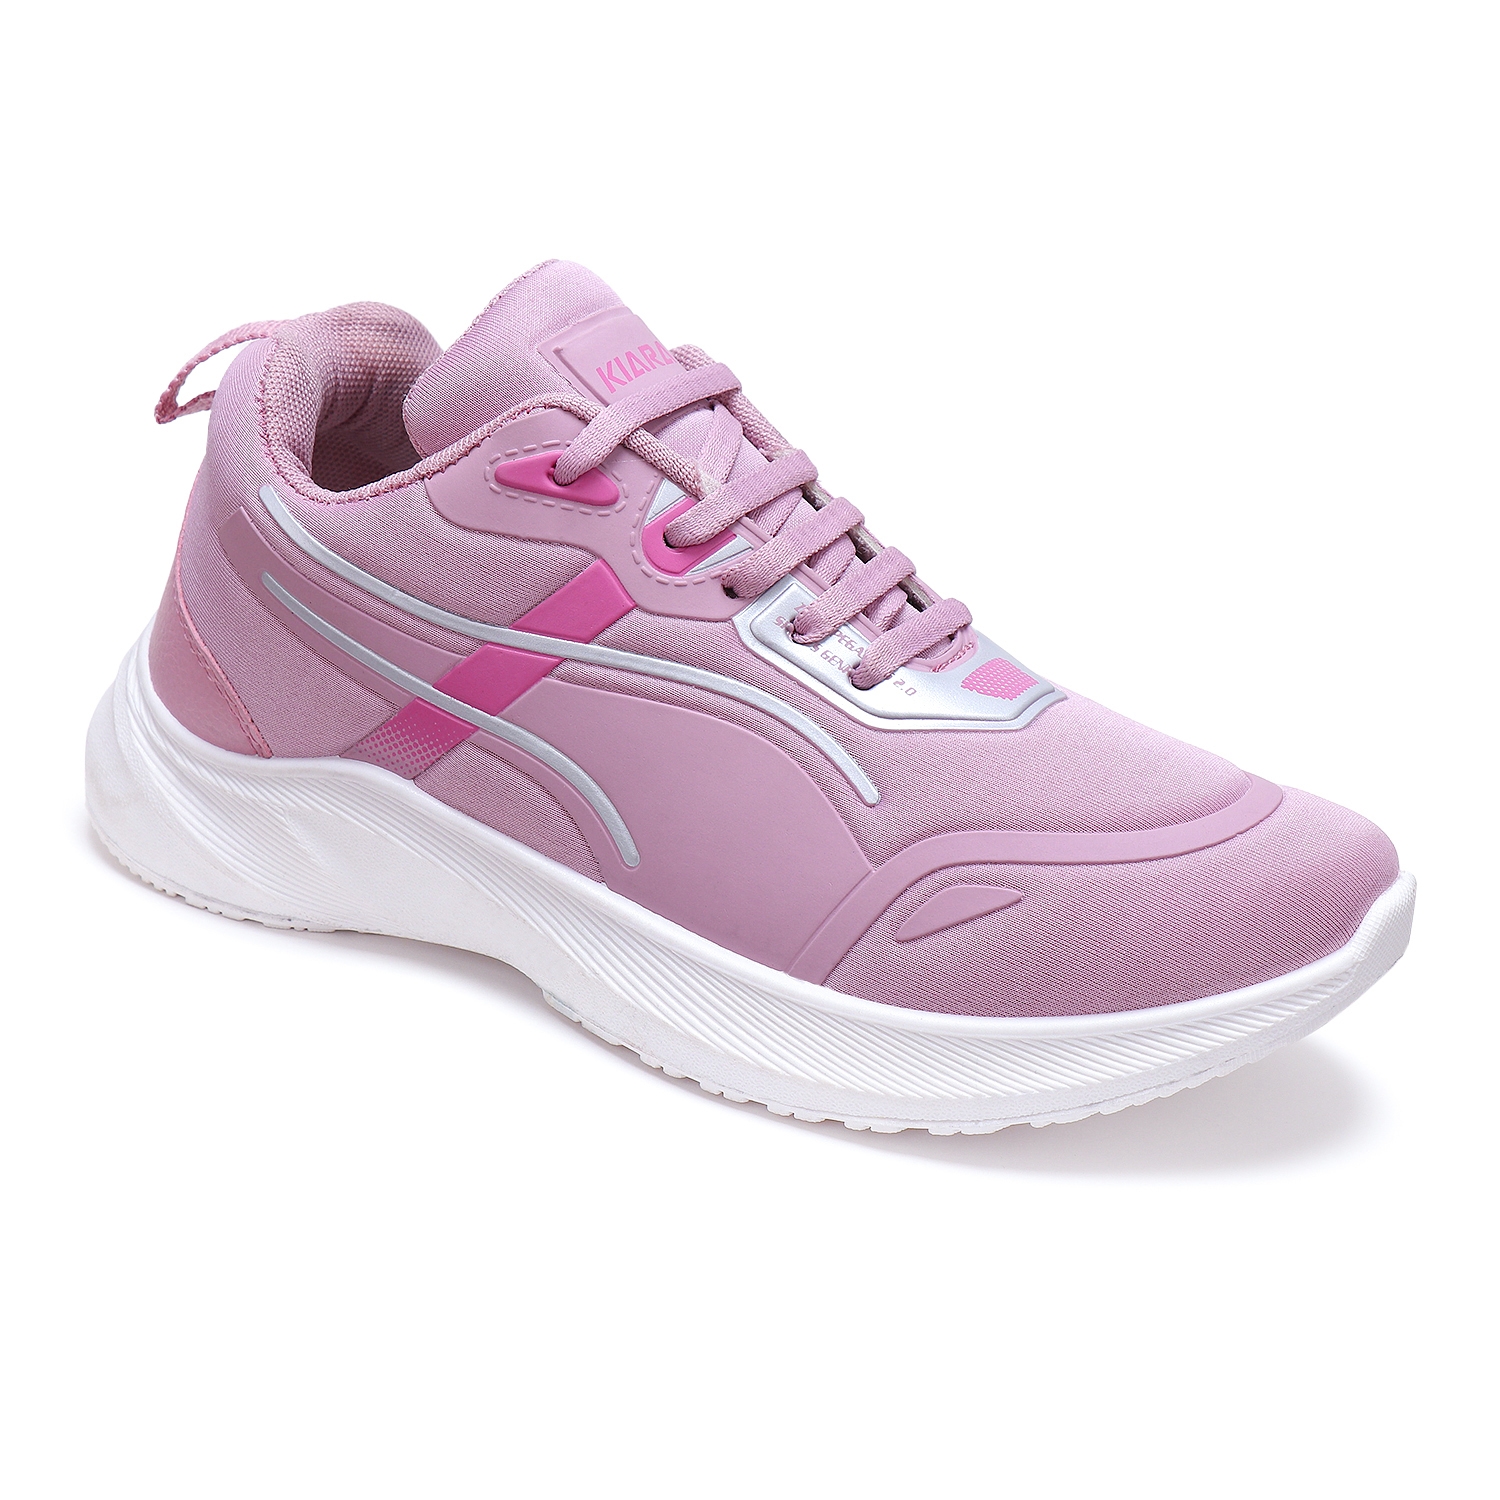 Women's Pink Running Shoes